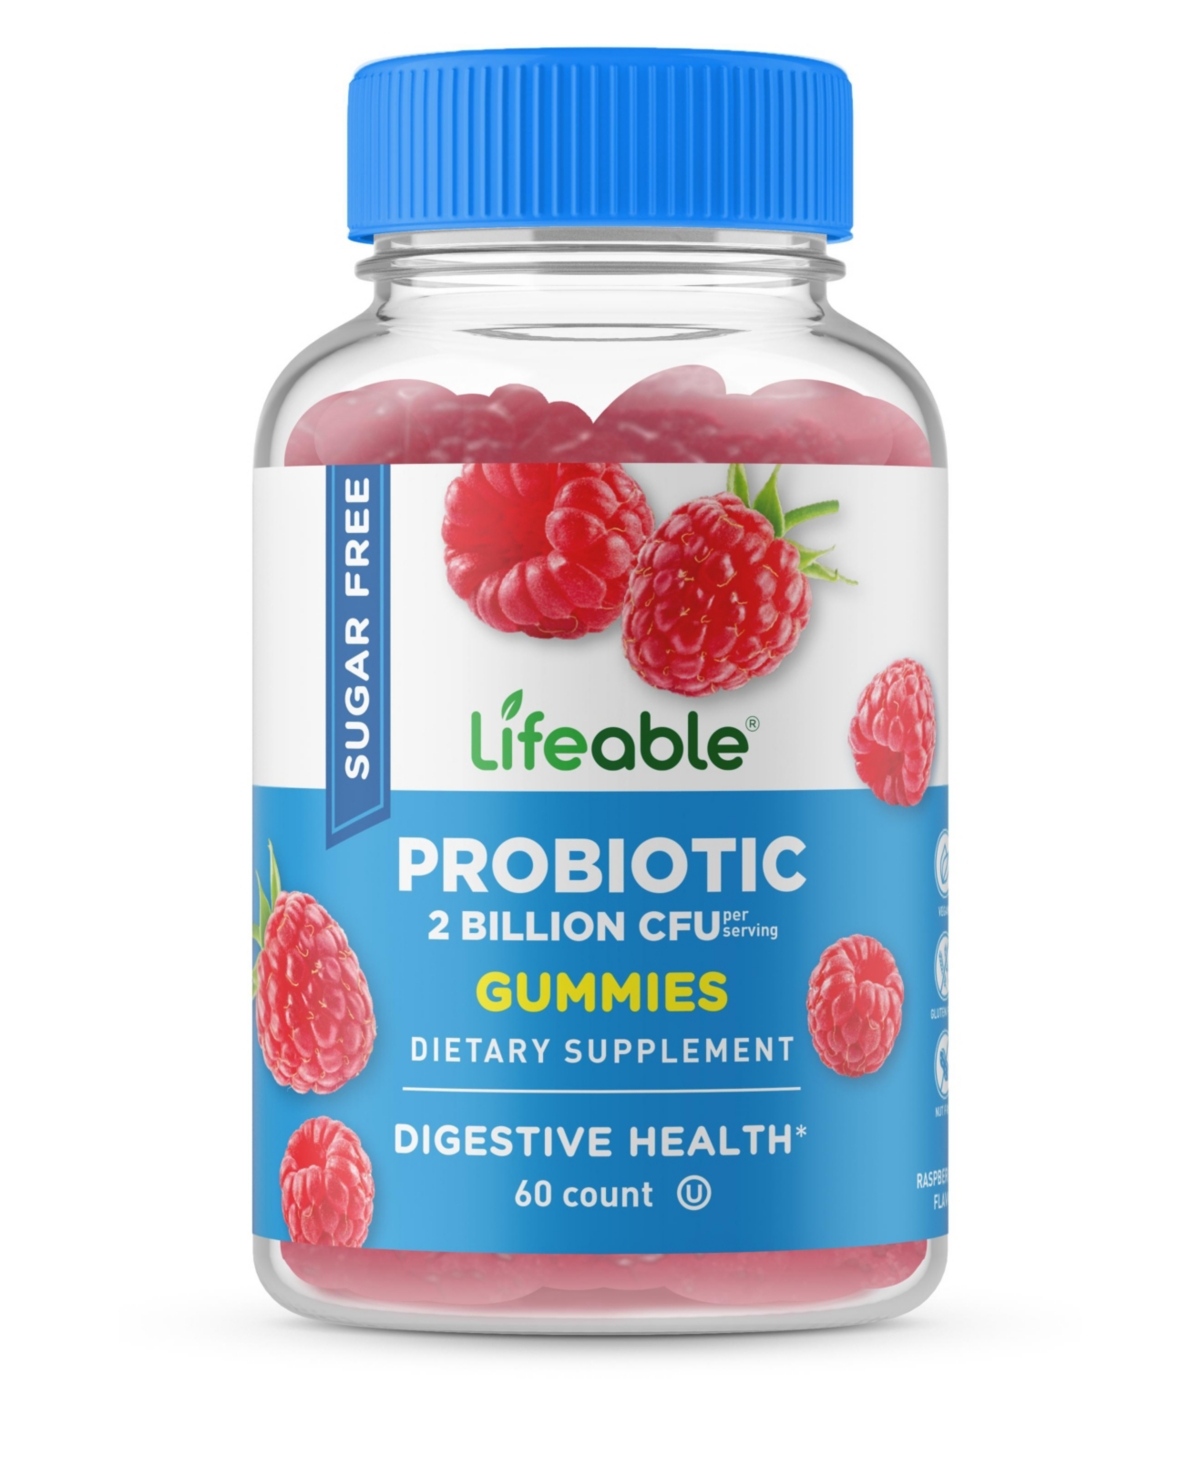 Sugar Free Probiotics Gummies - Healthy Digestive,Immune Functions - Great Tasting Natural Flavor, Dietary Supplement Vitamins - 60 Gummies -